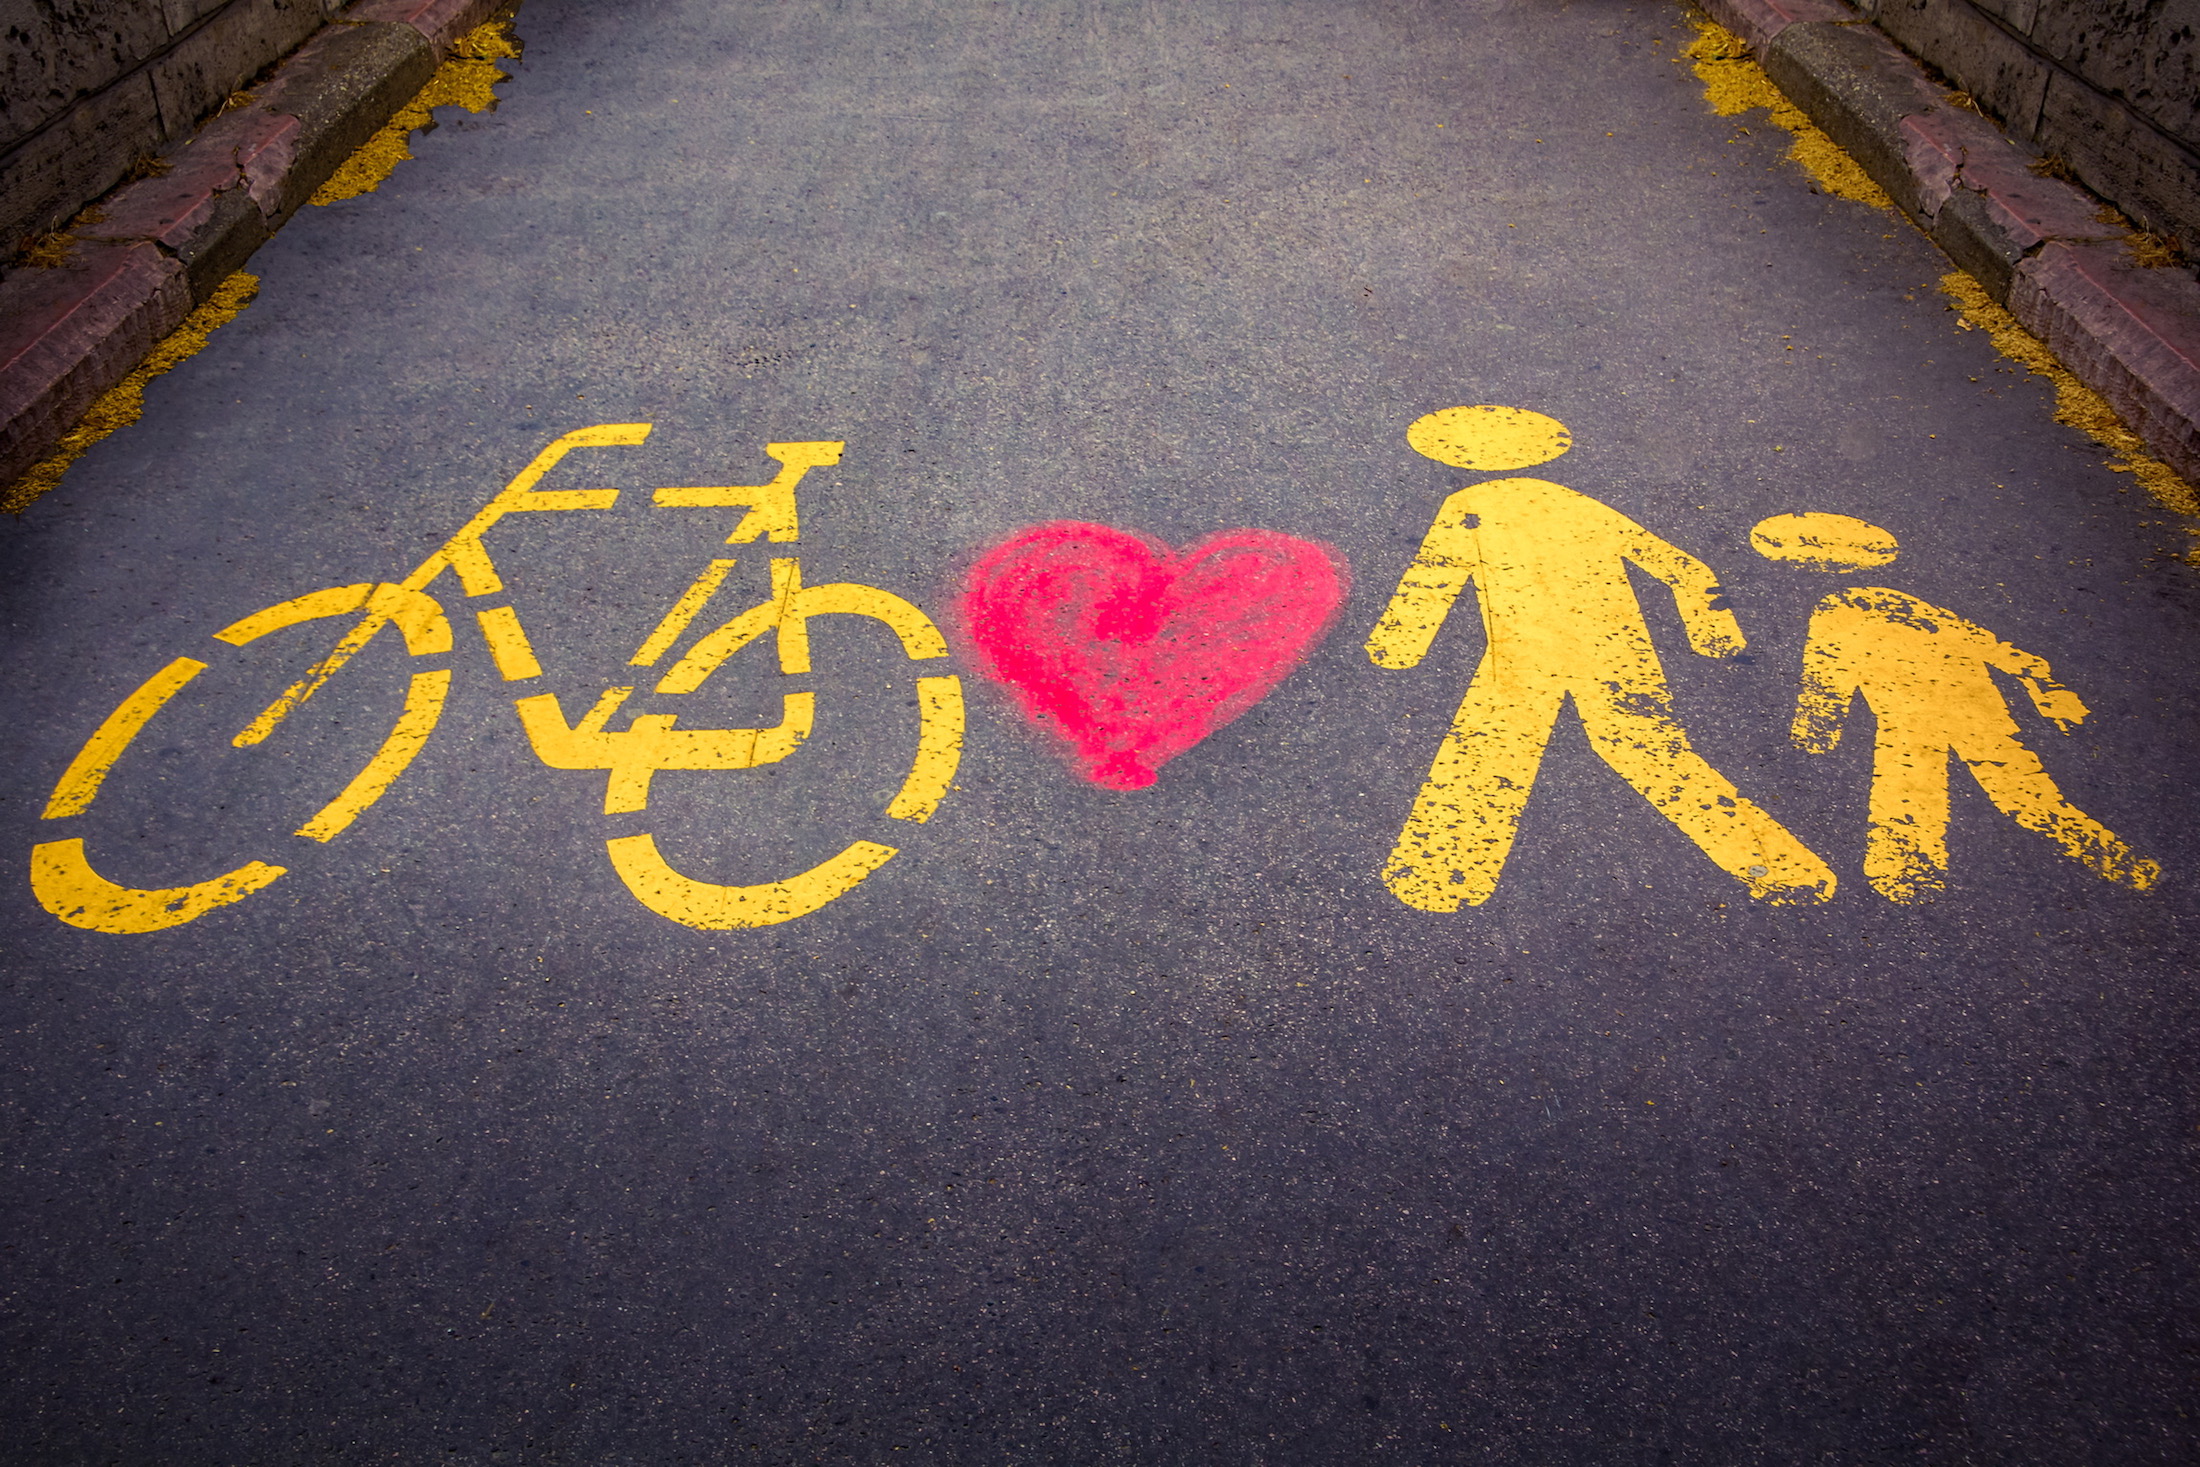 Bike, heart, and pedestrians stenciled on street